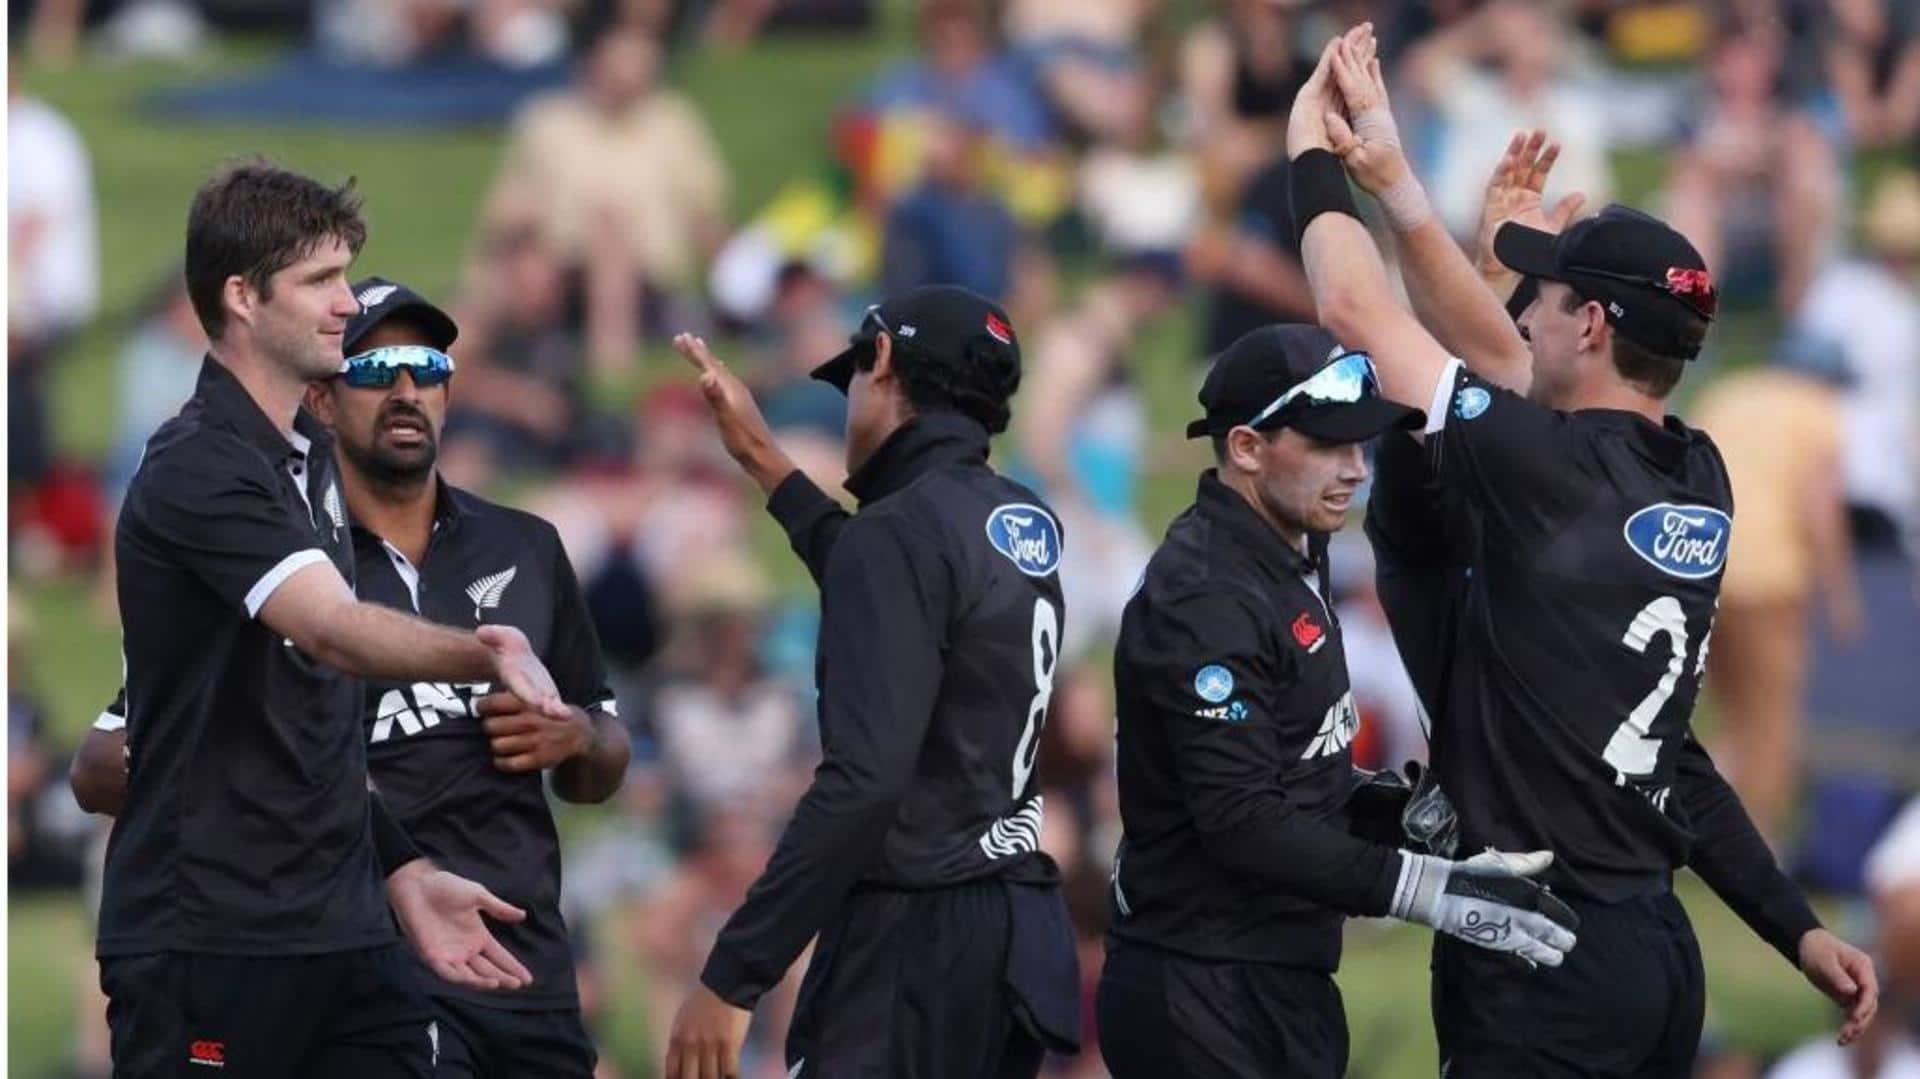 Dominant NZ thrash SL in 3rd ODI, seal series 2-0 